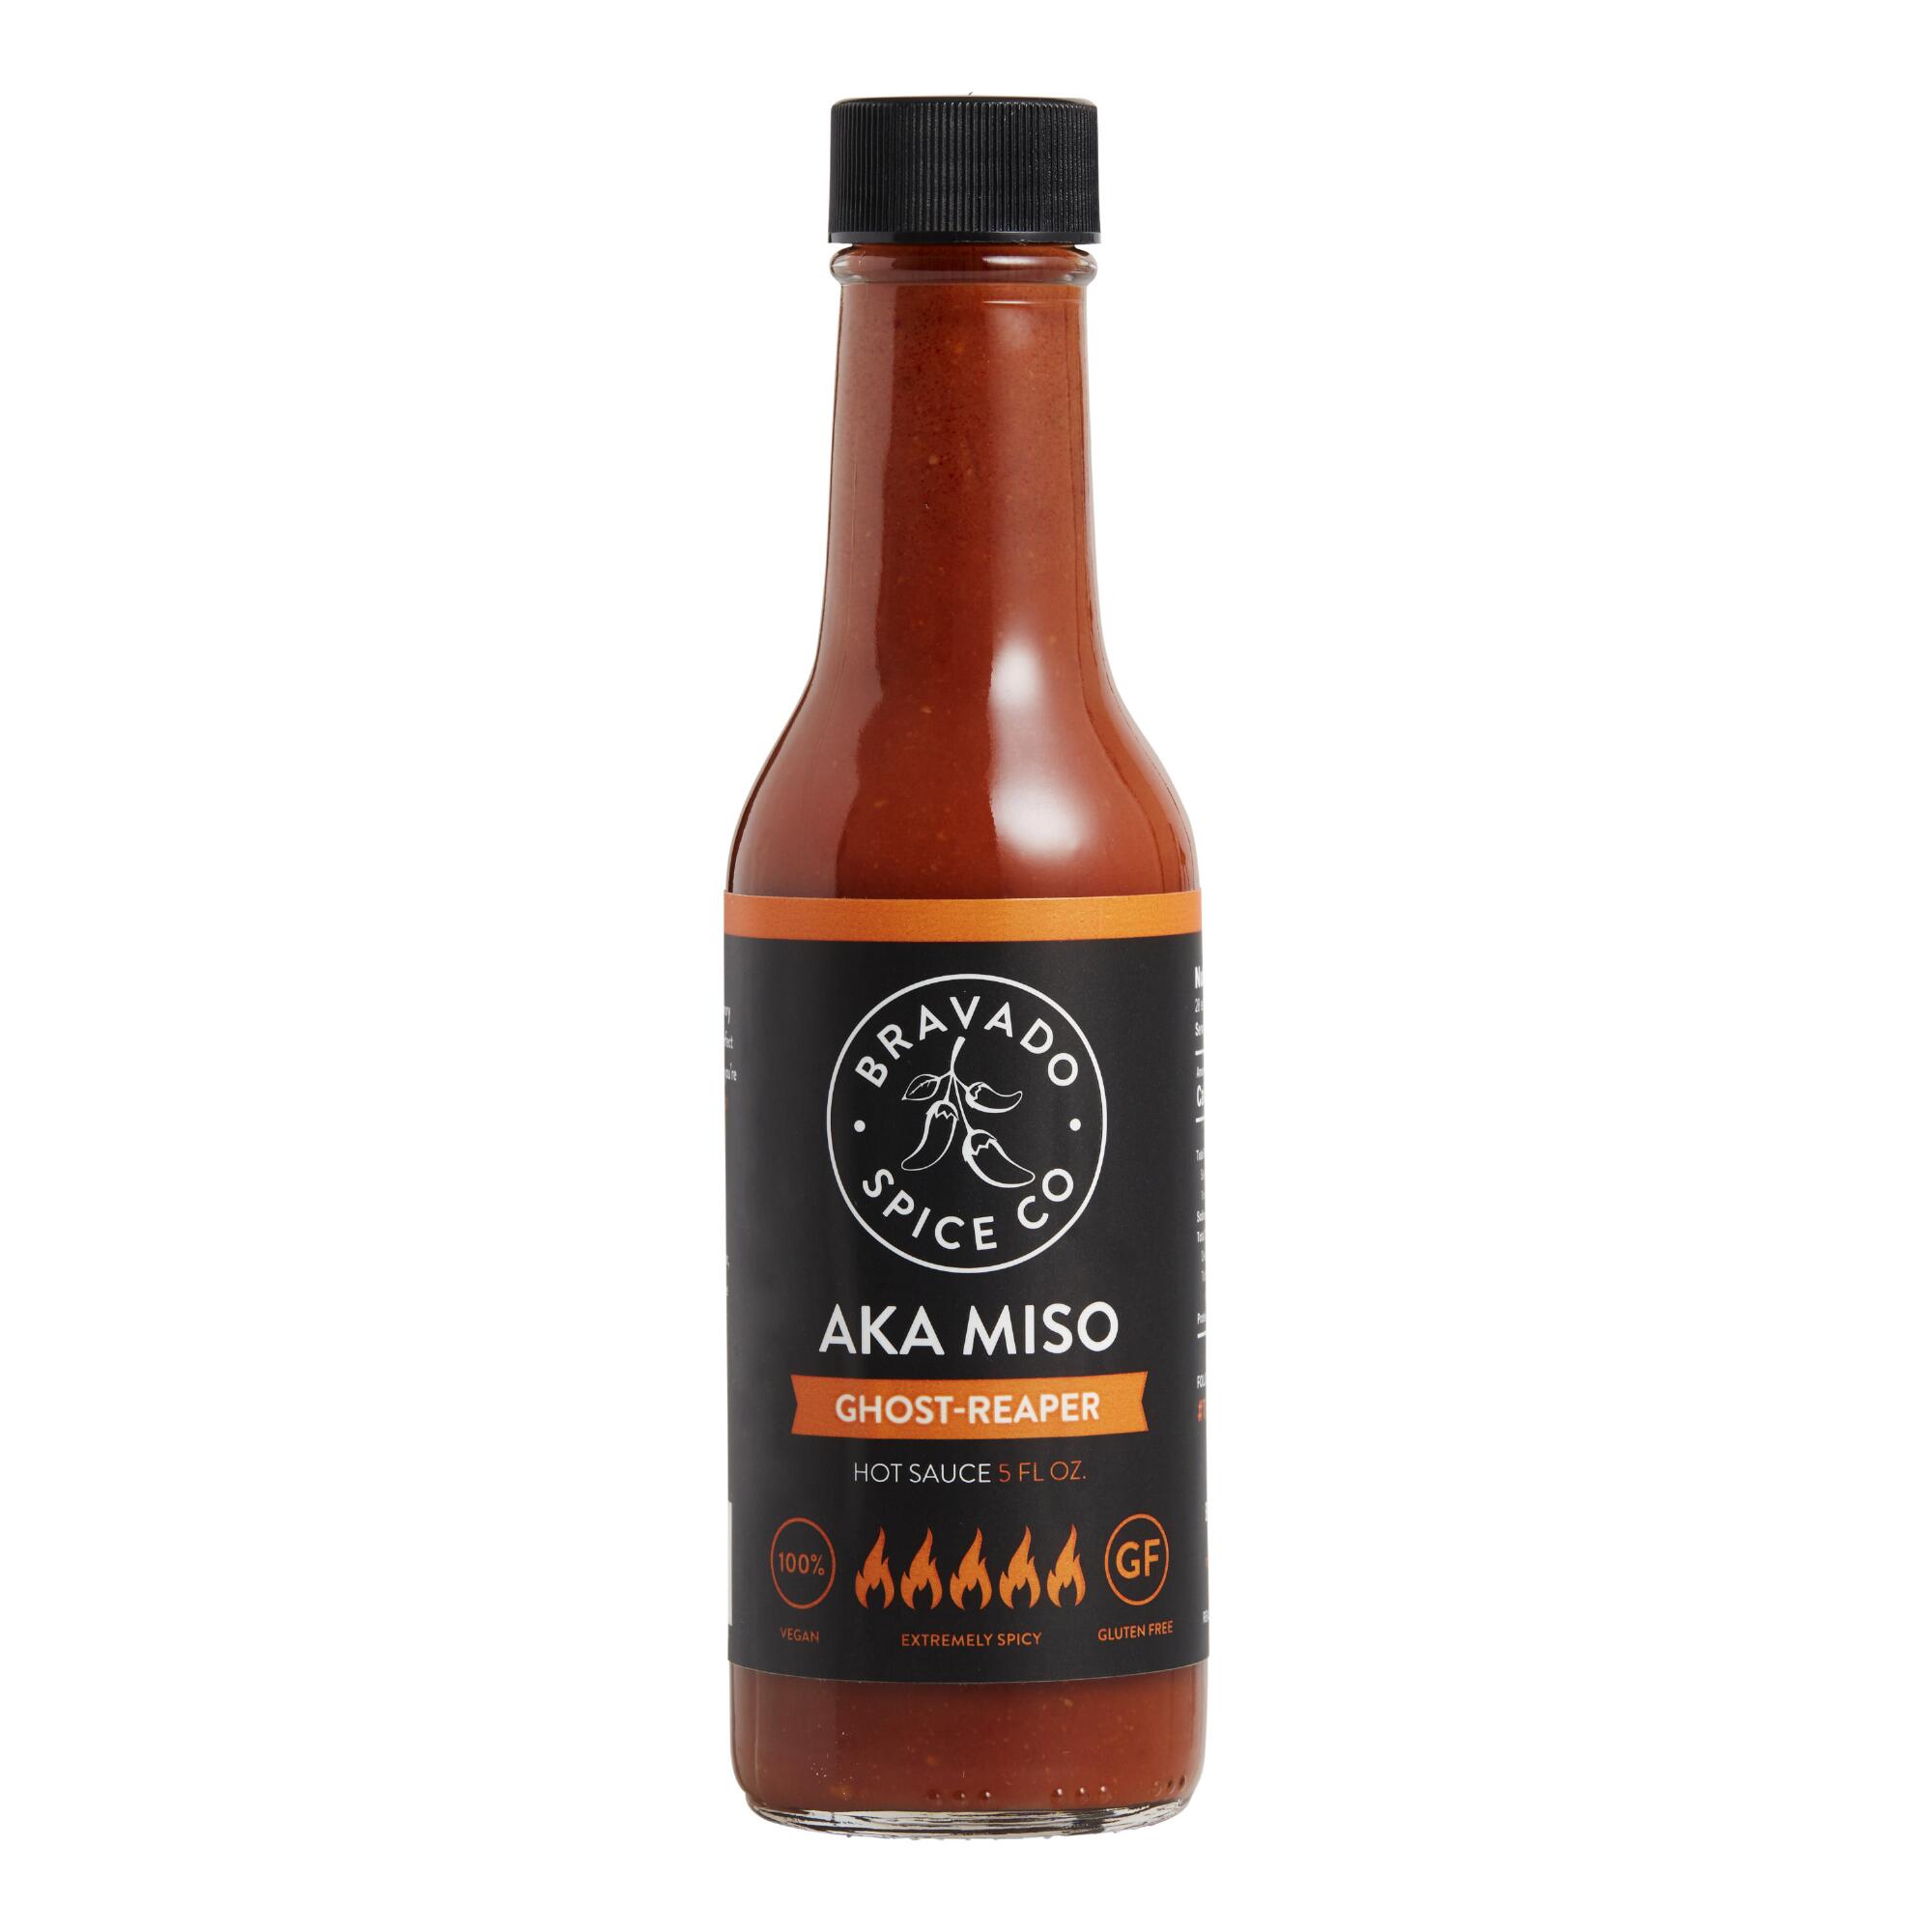 Bravado AKA Miso Ghost Reaper Hot Sauce by World Market